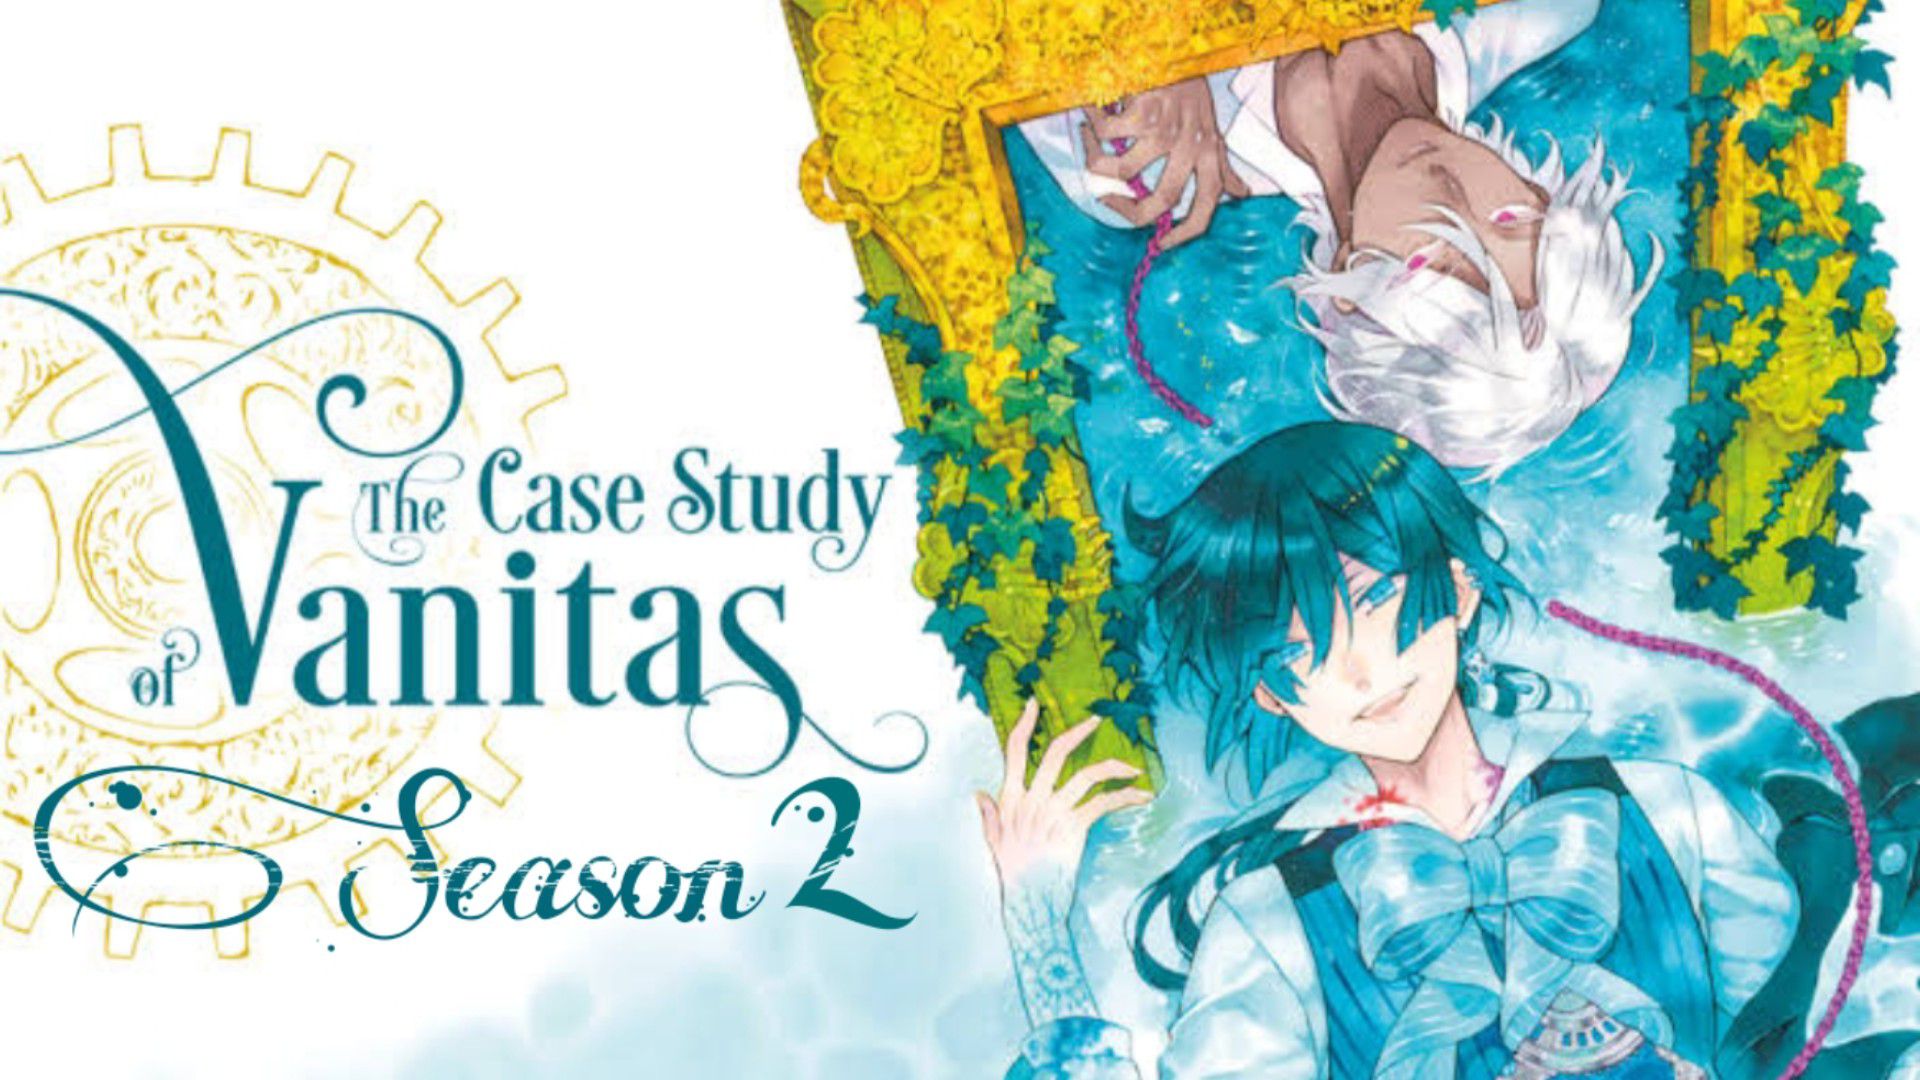 The Case Study of Vanitas Season 2